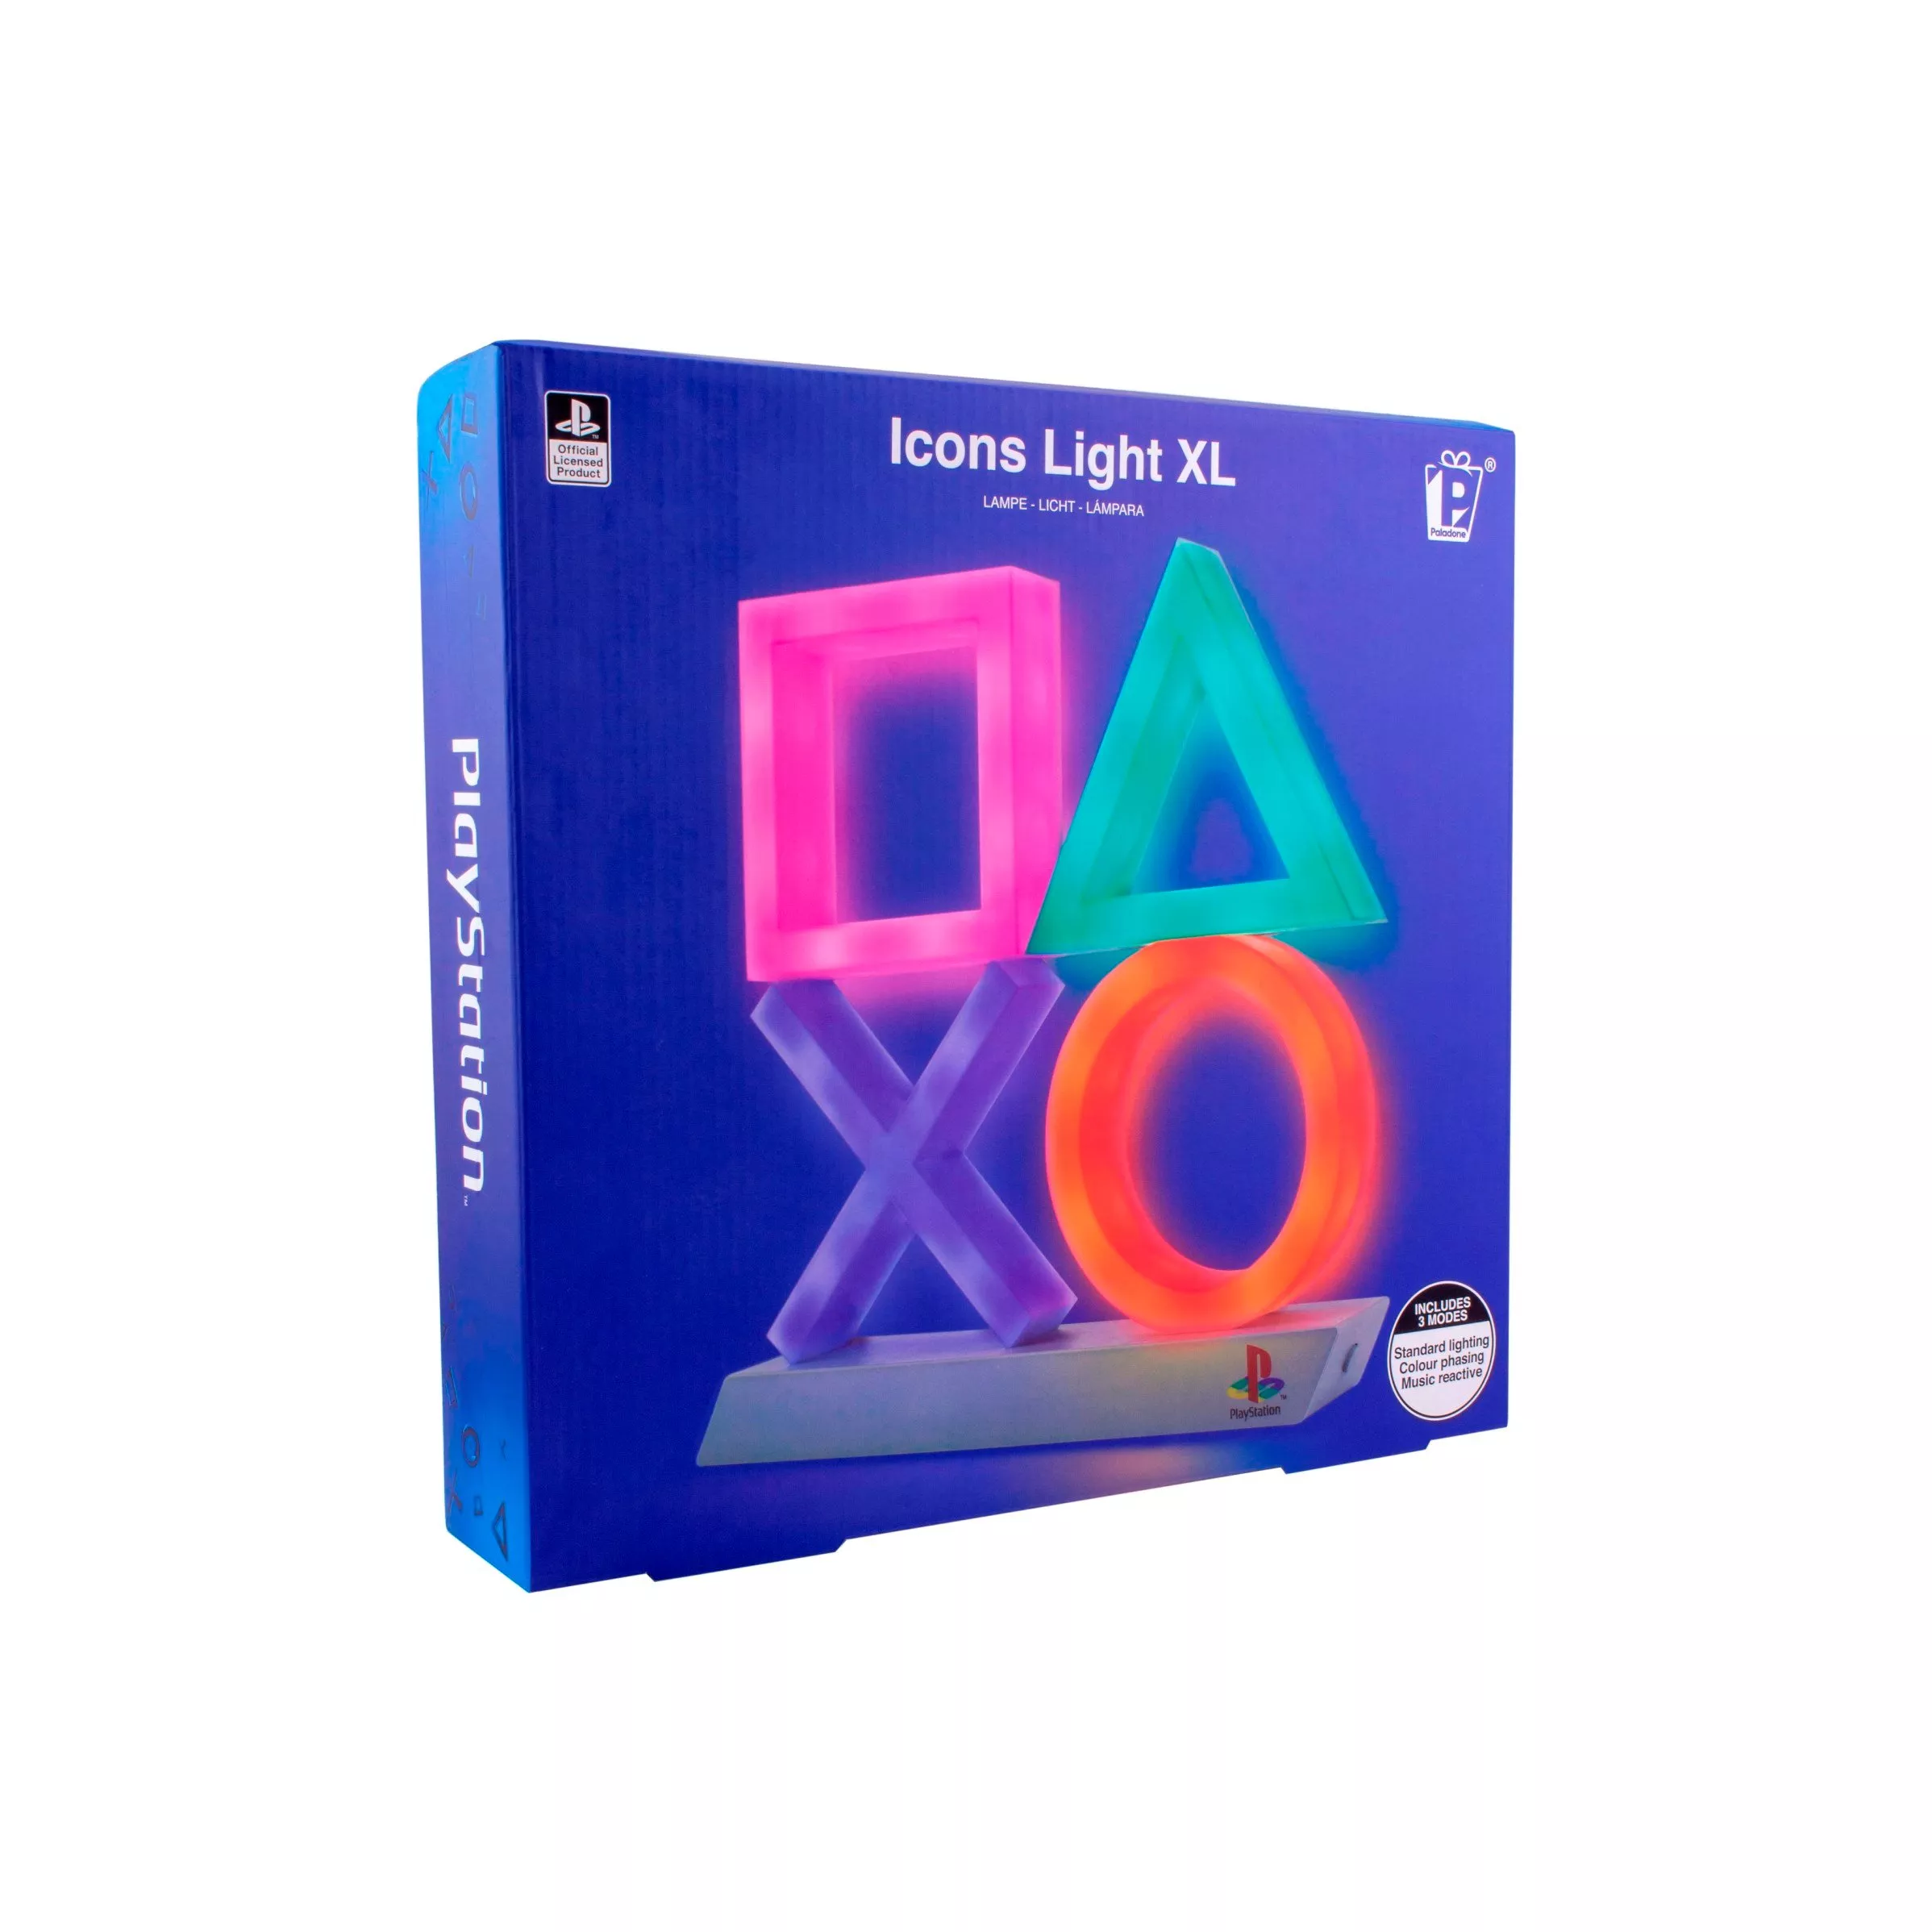 PlayStation icons Light XL